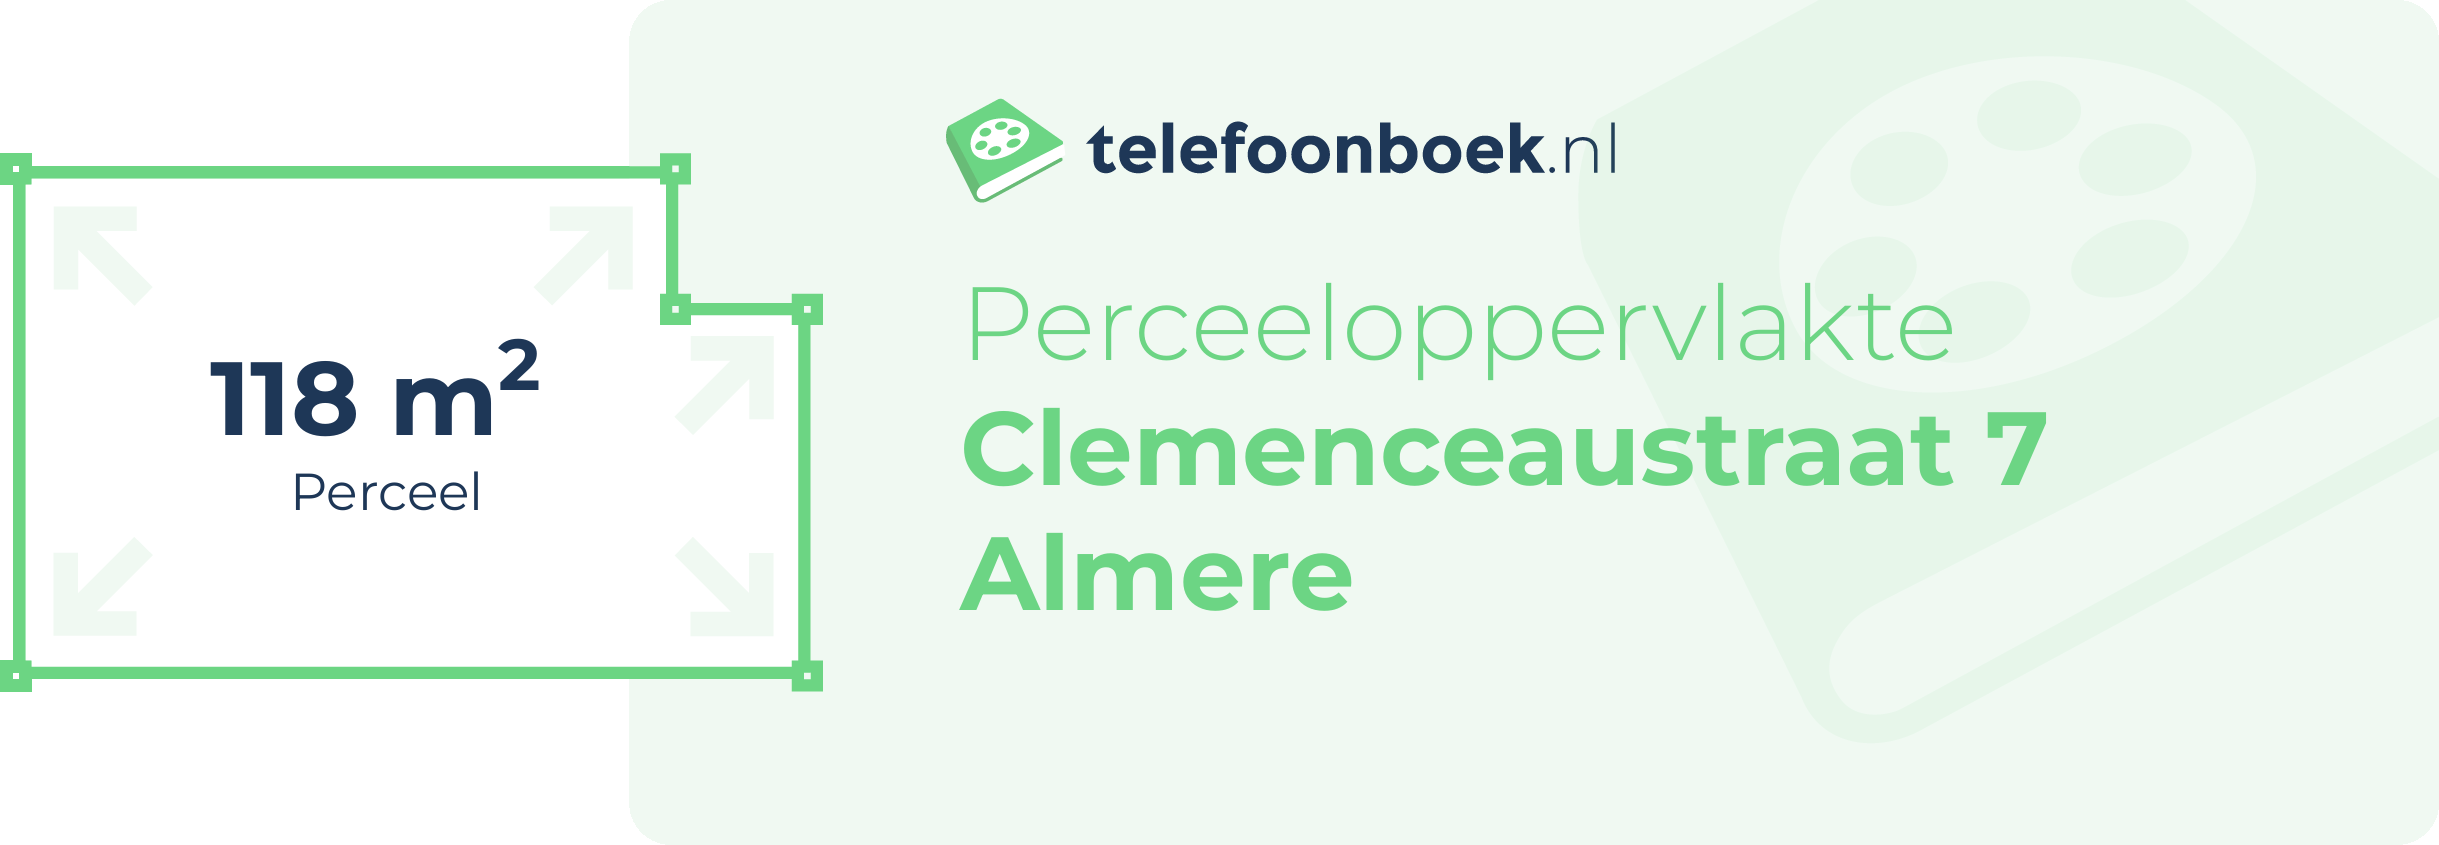 Perceeloppervlakte Clemenceaustraat 7 Almere